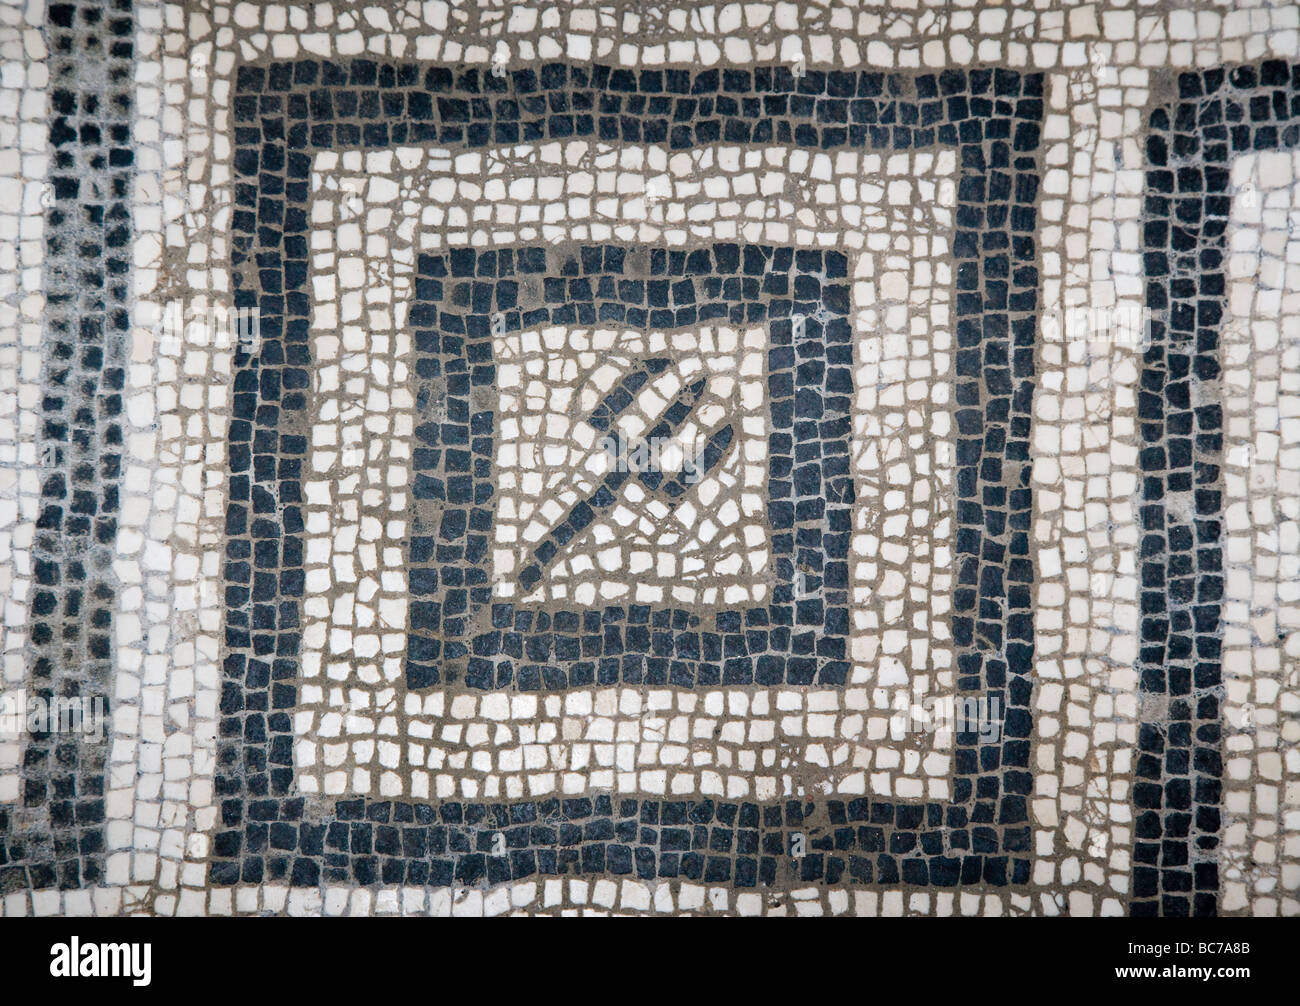 Poseidon Neptune trident in mosaic on the floor of the baths complex Herculaneum Italy Stock Photo